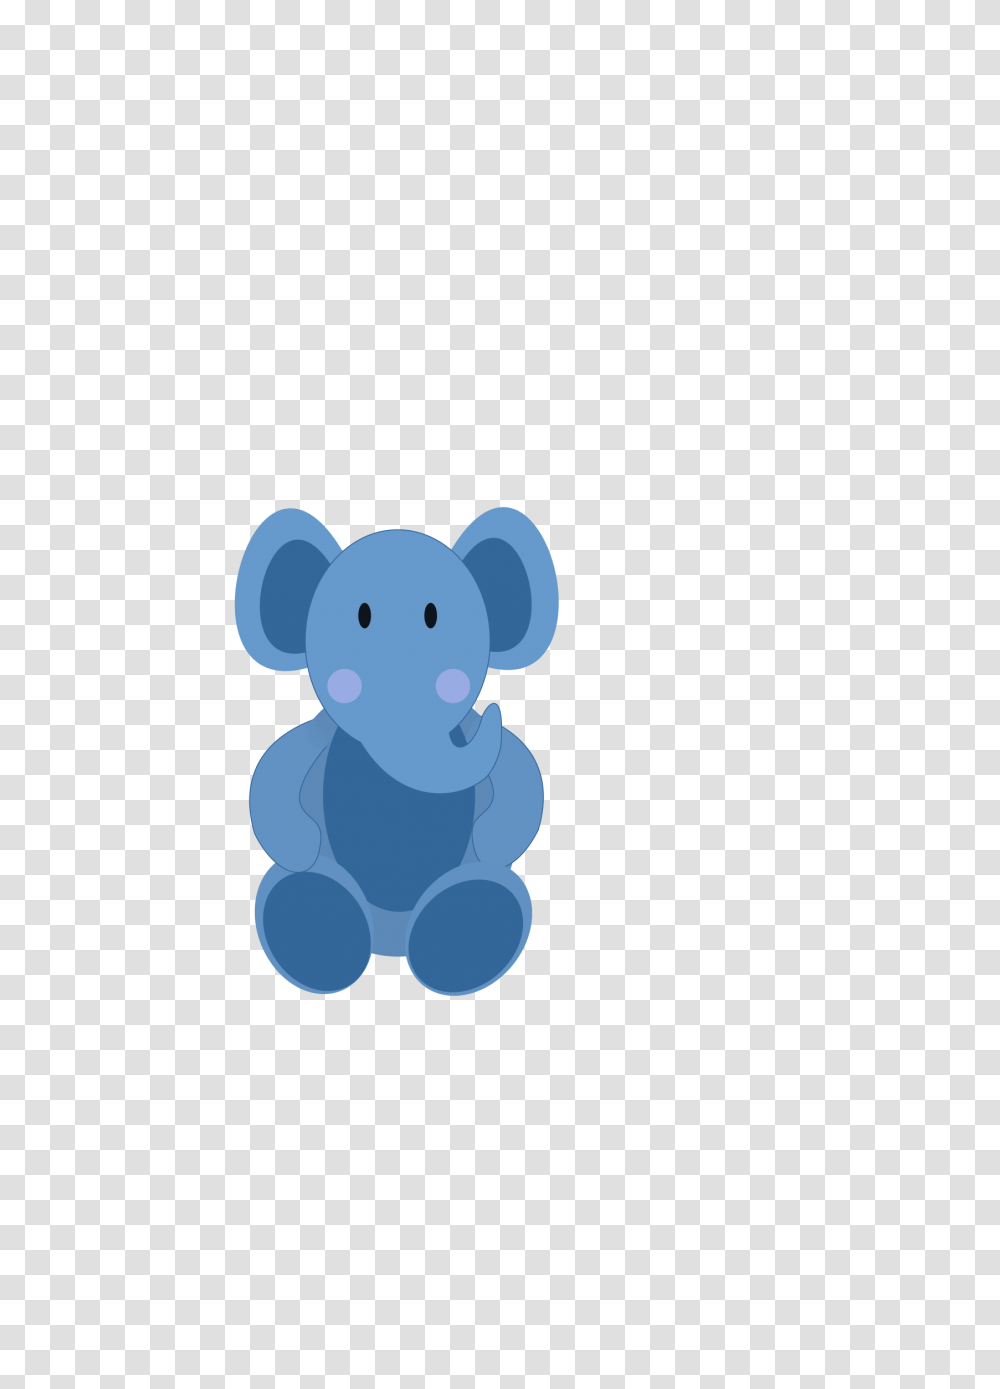 Baby Elephant Clipart Cerca Con Google Clip Art In Baby, Mammal, Animal, Bear, Wildlife Transparent Png